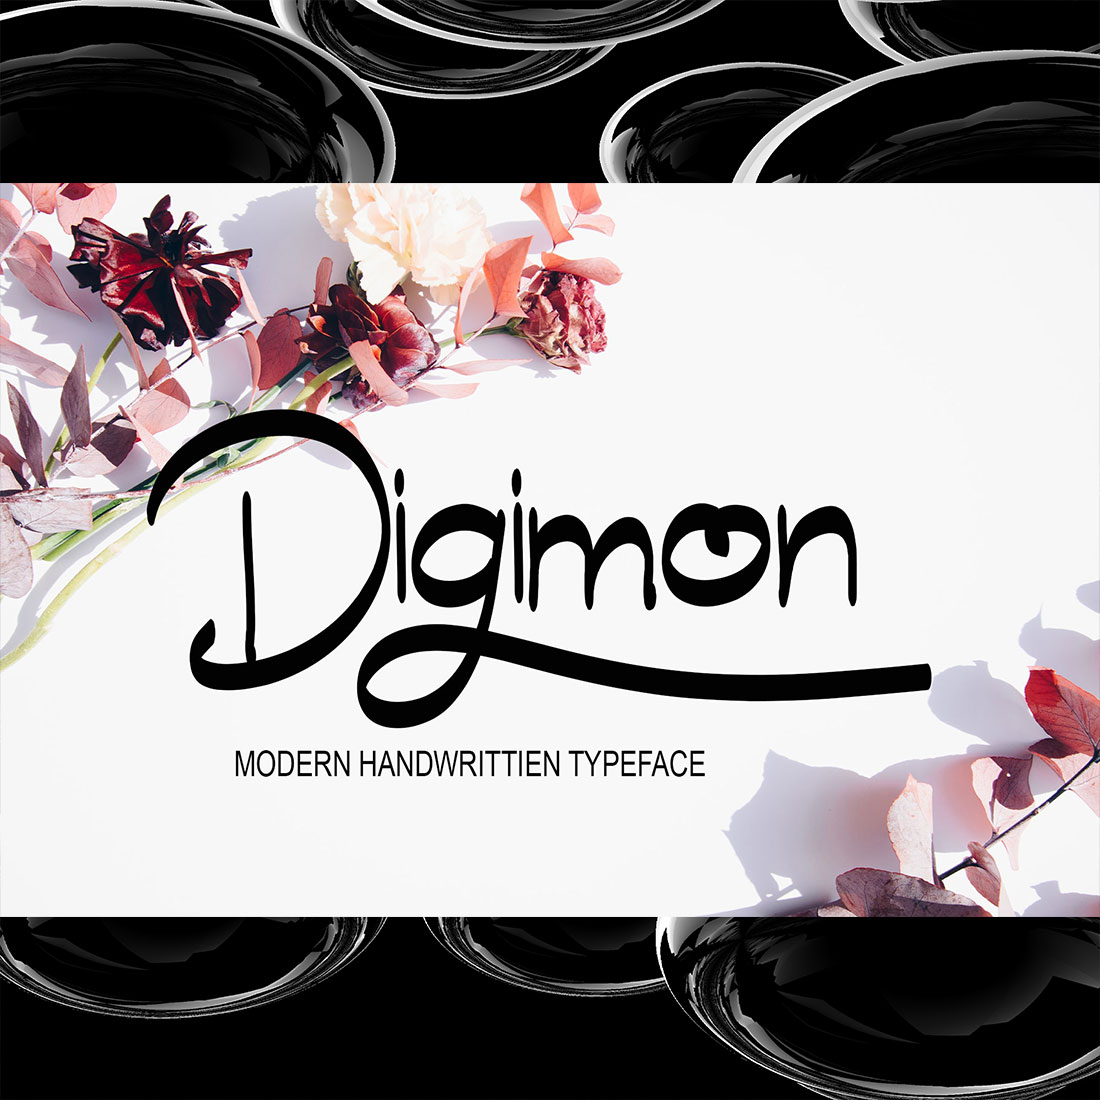 Signature Font Script Digimon Design cover image.